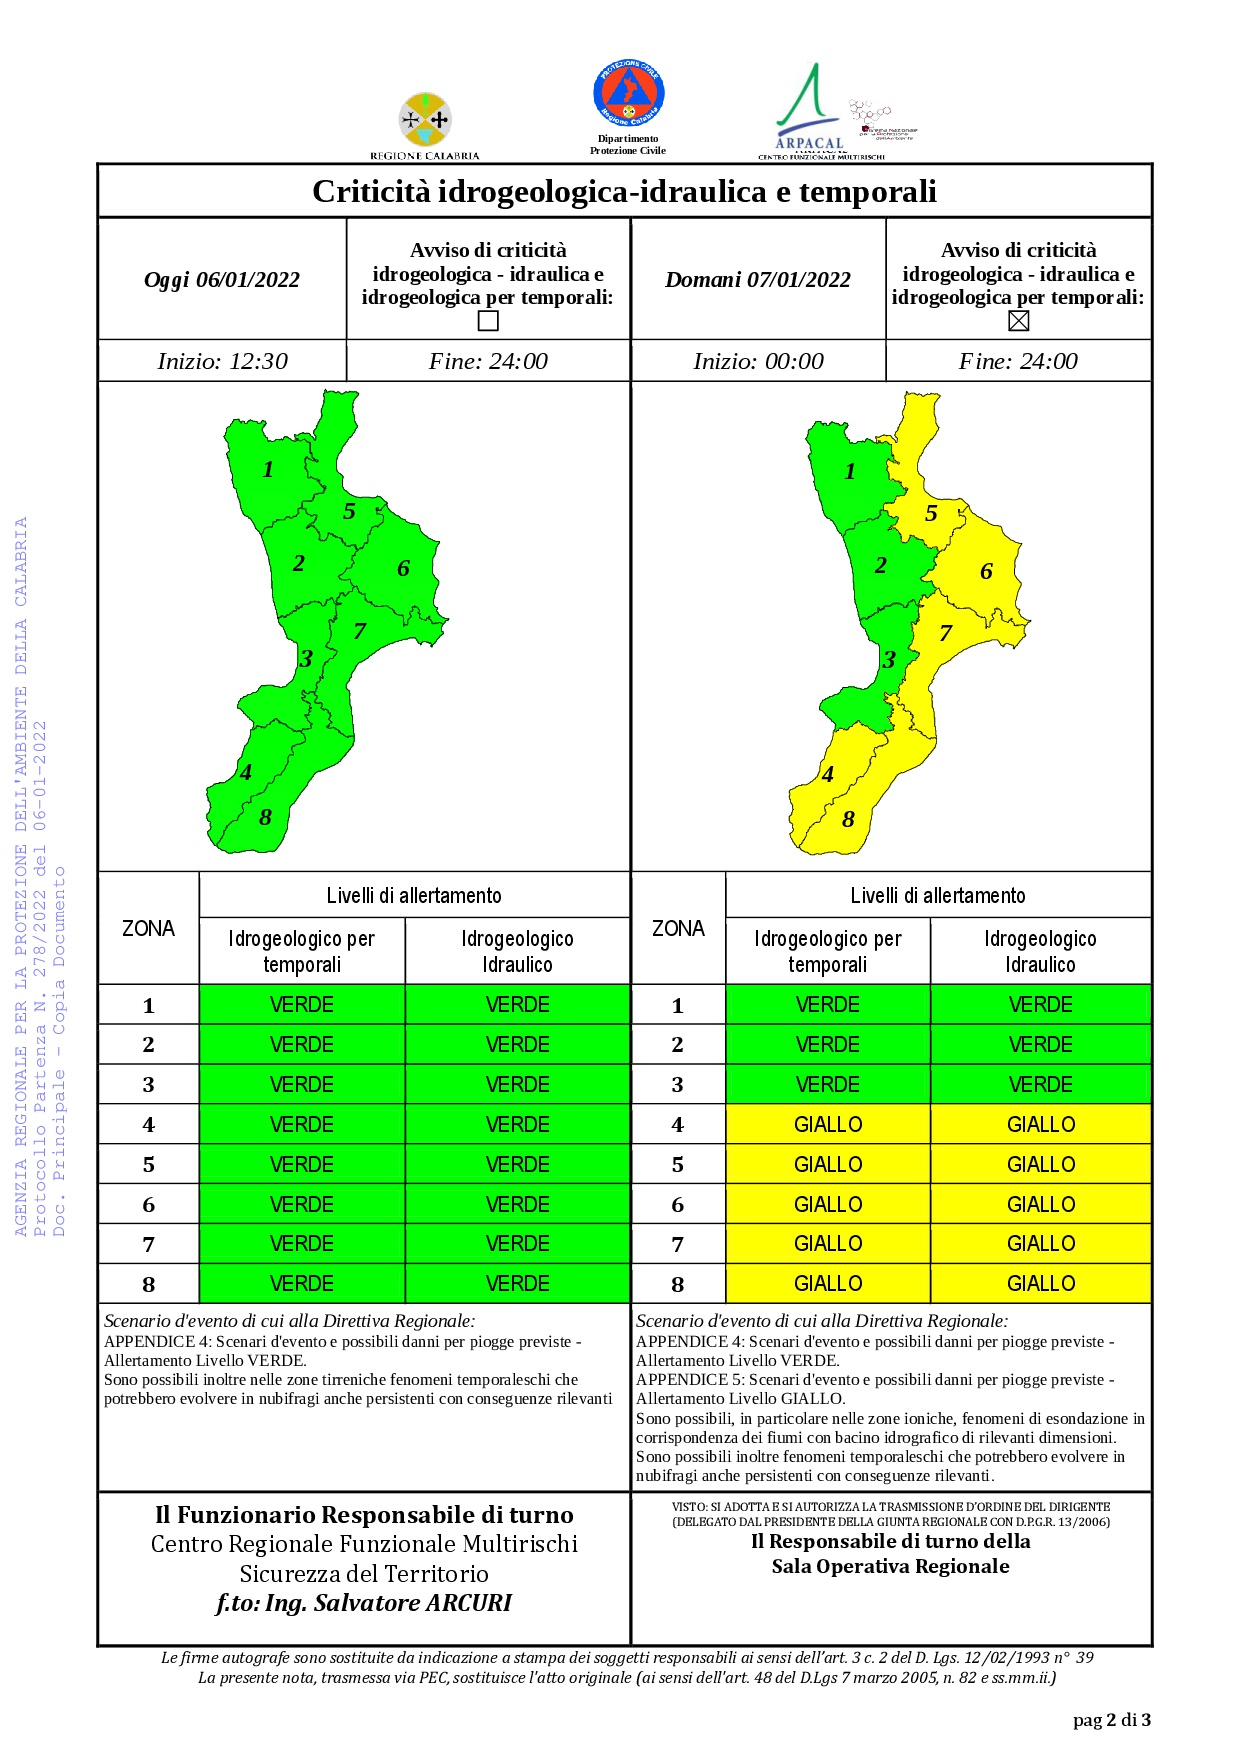 Criticità idrogeologica-idraulica e temporali in Calabria 06-01-2022